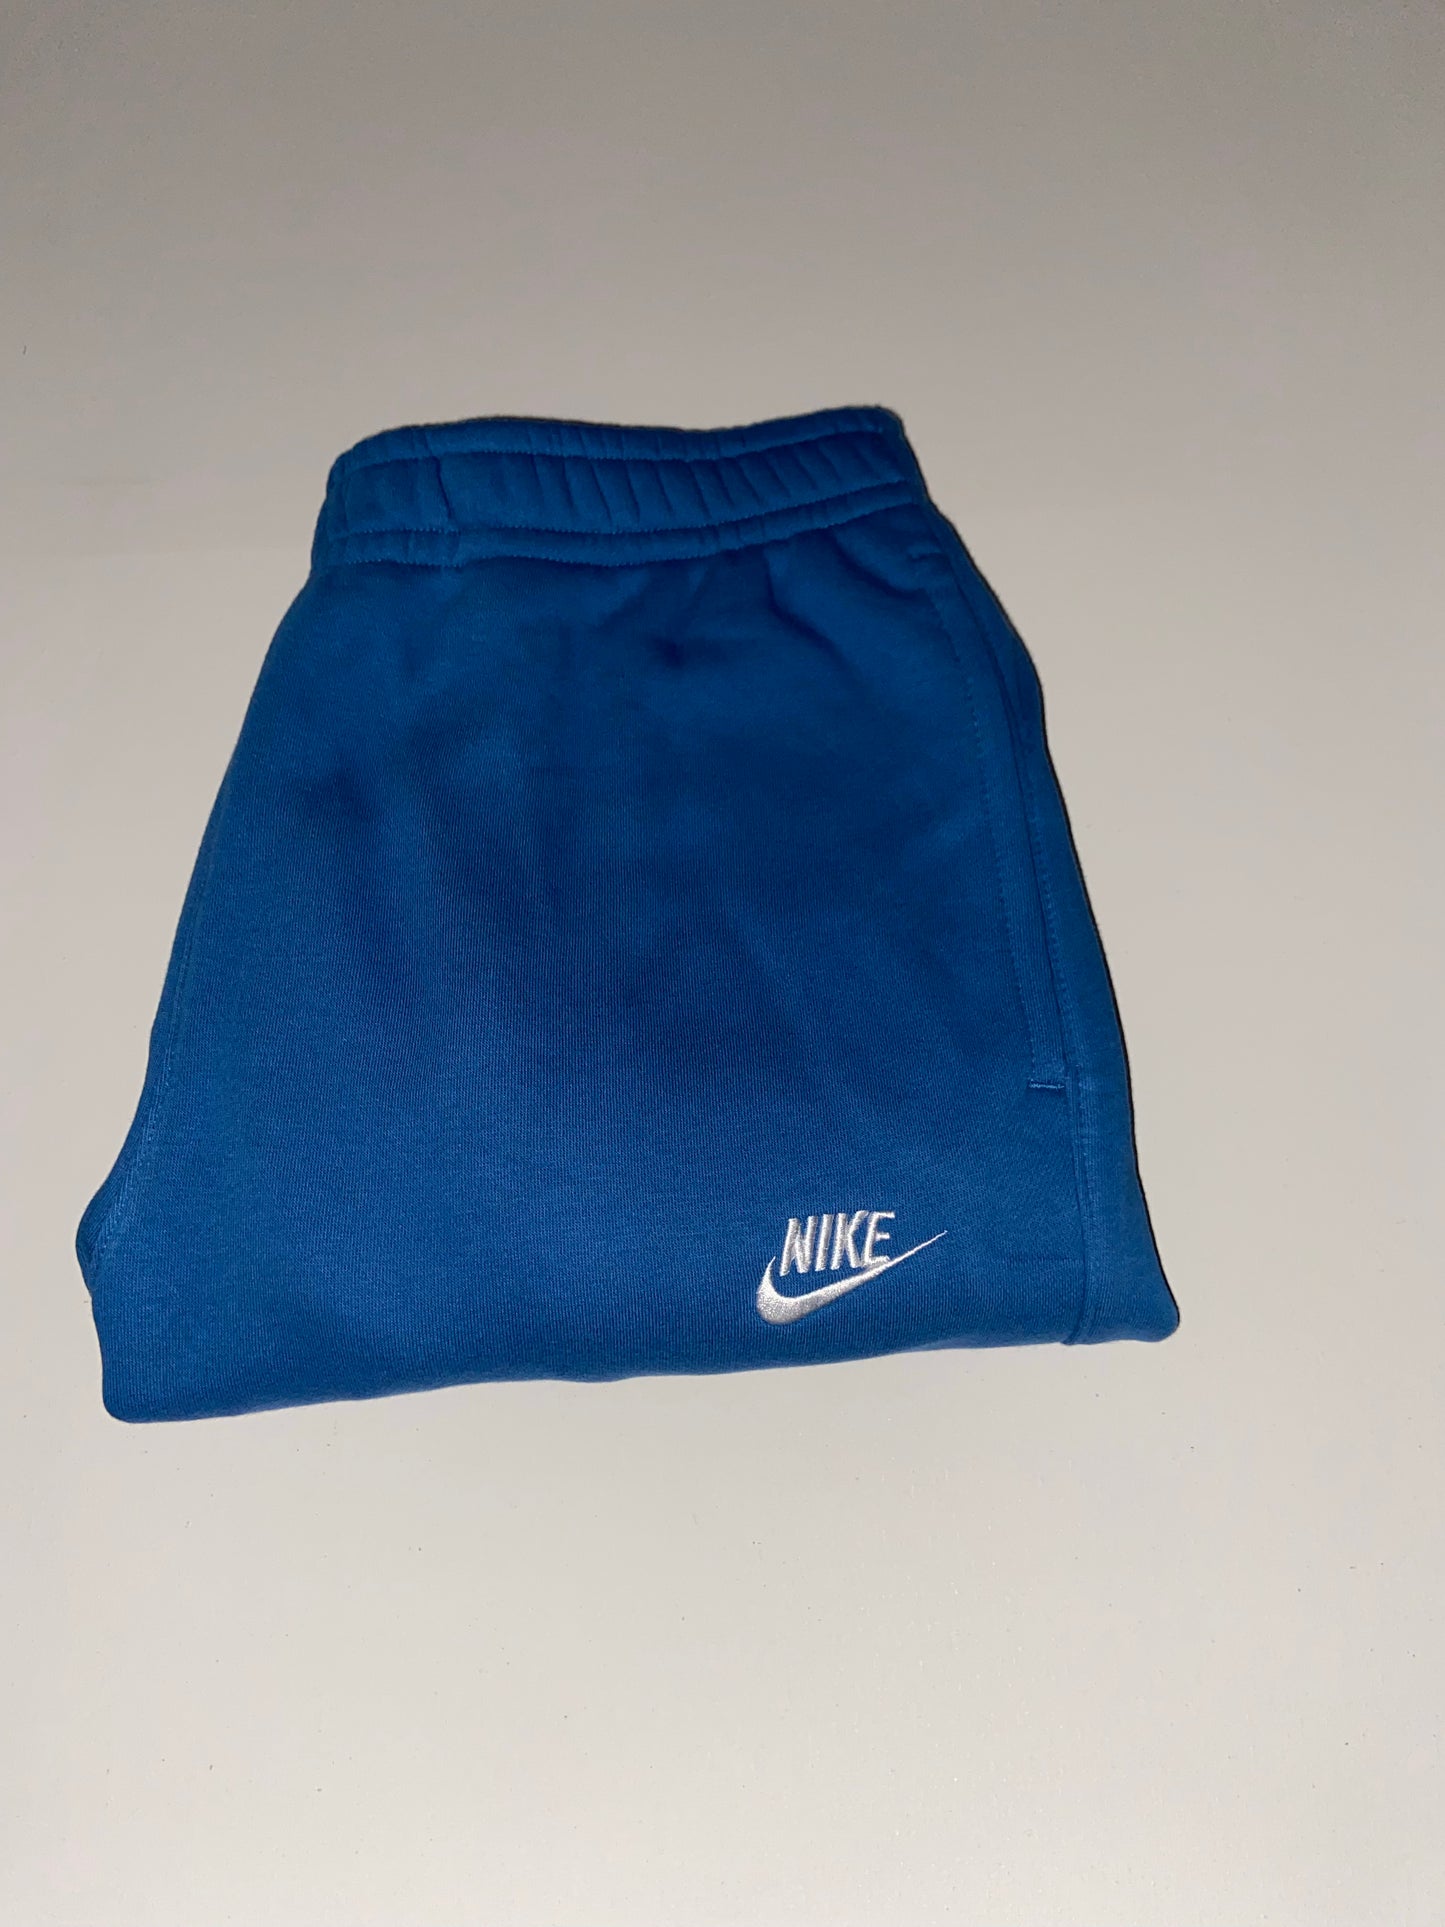 Ensemble Nike fleece bleu électrique – Fripe store